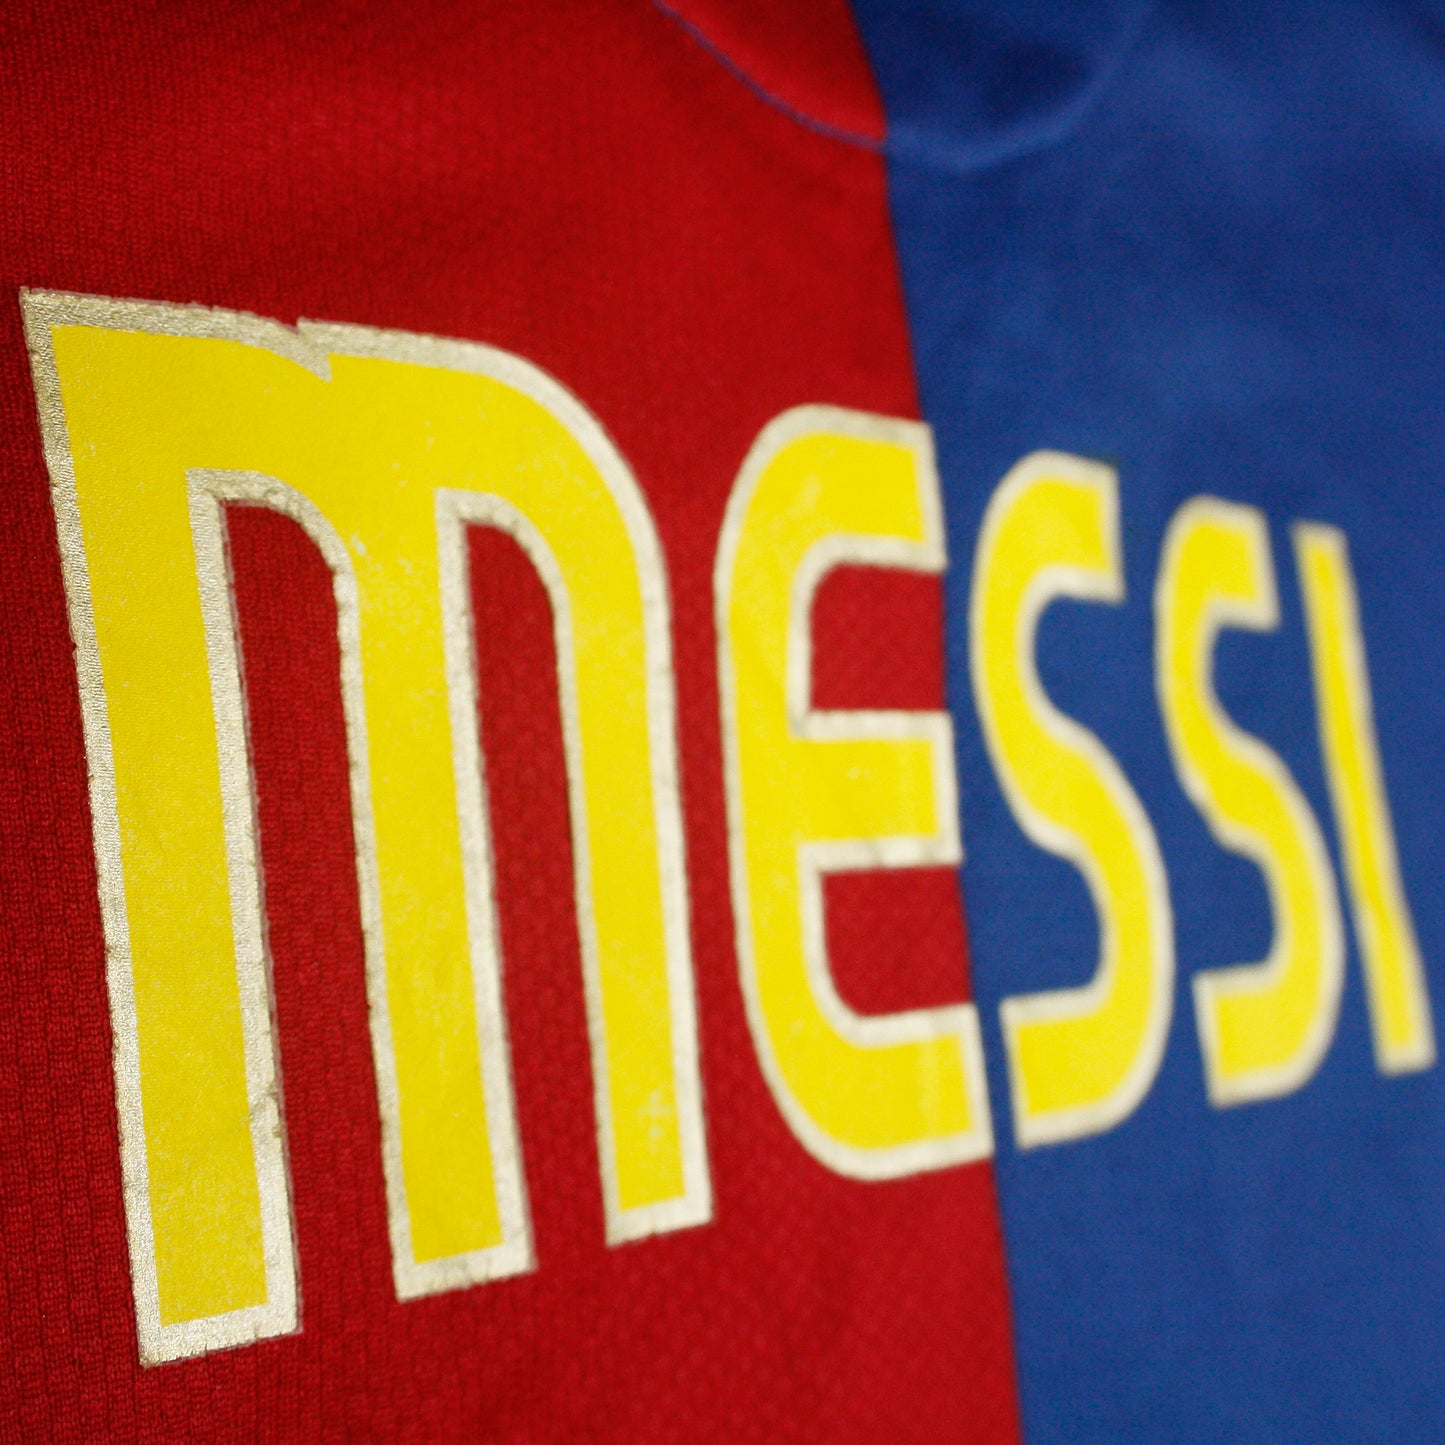 Barcelona 08/09 • Home Shirt • XXL • Messi #10